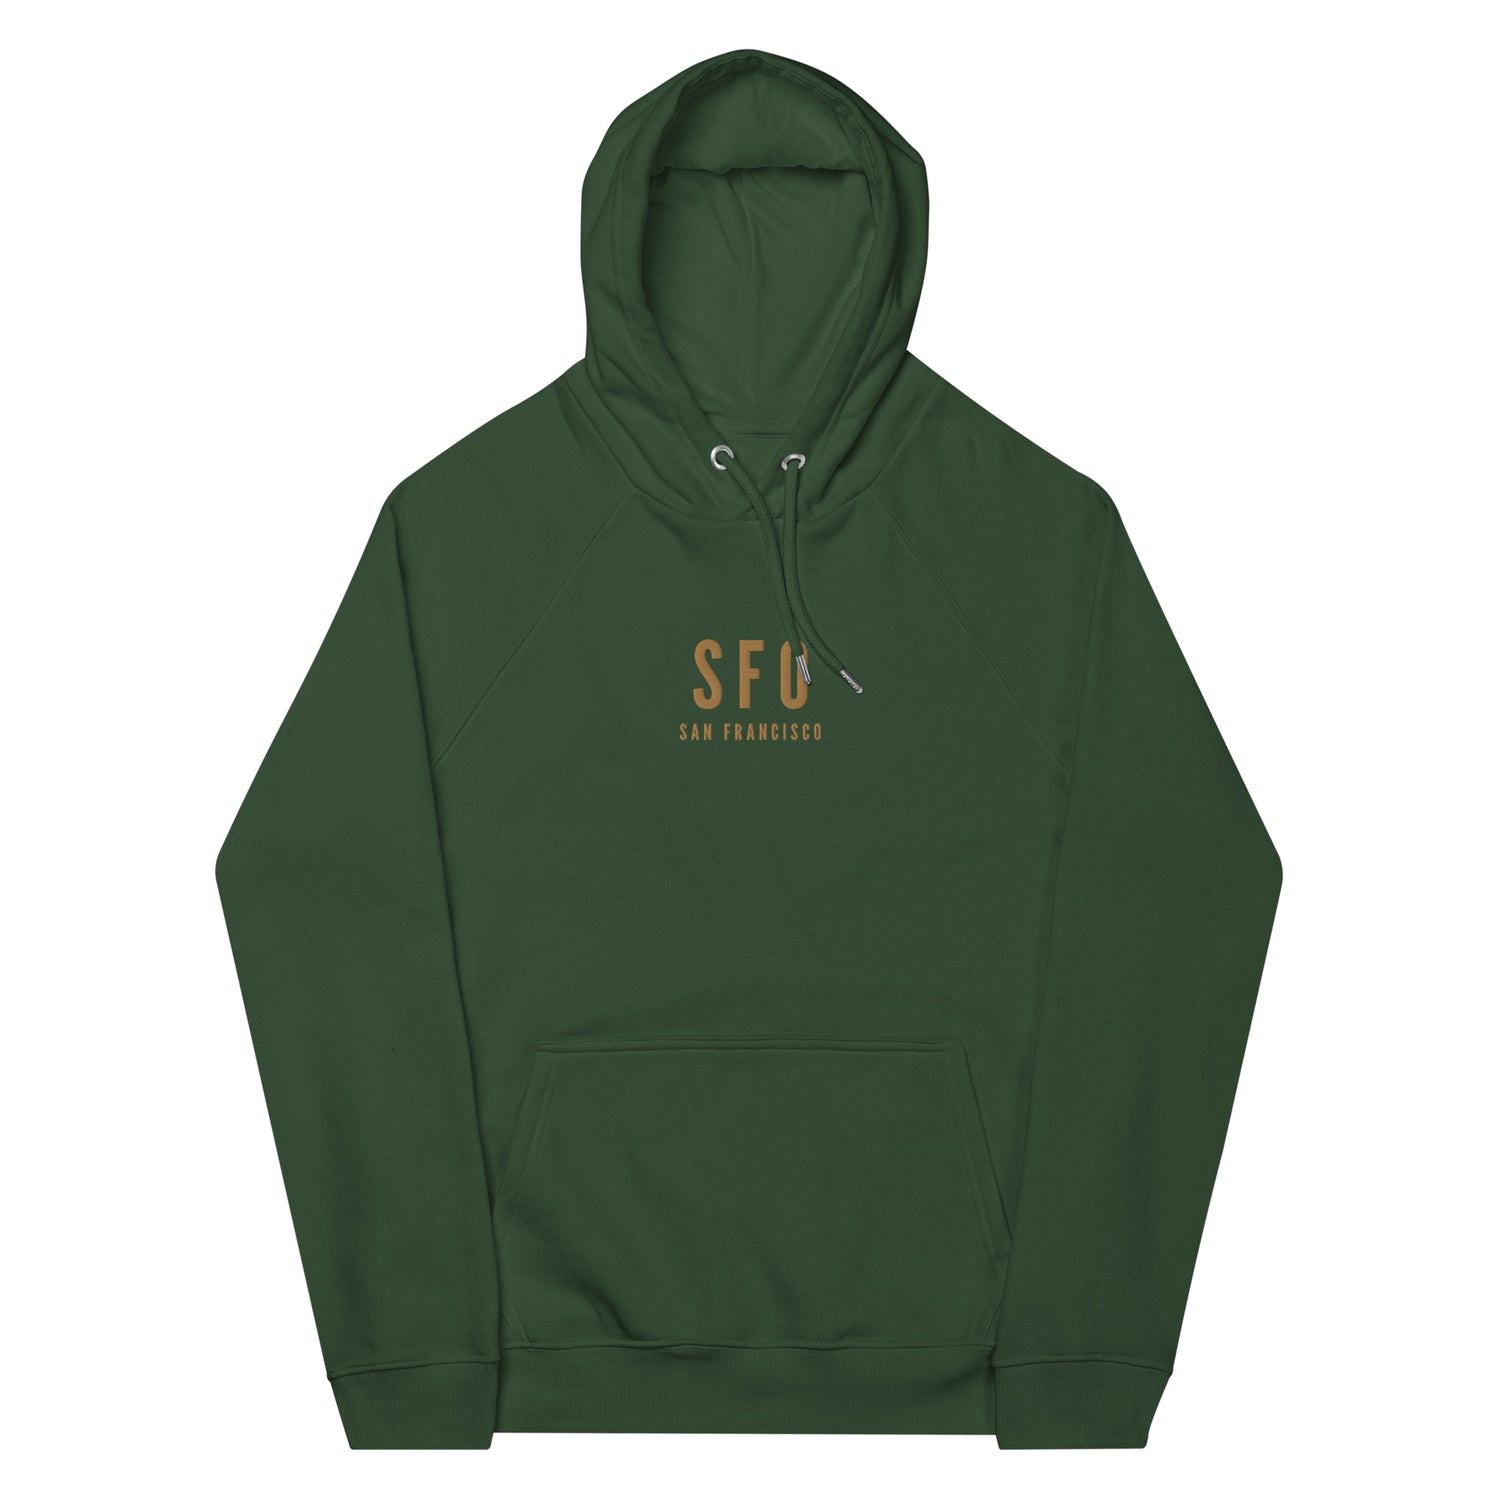 San Francisco California Hoodies and Sweatshirts • SFO Airport Code